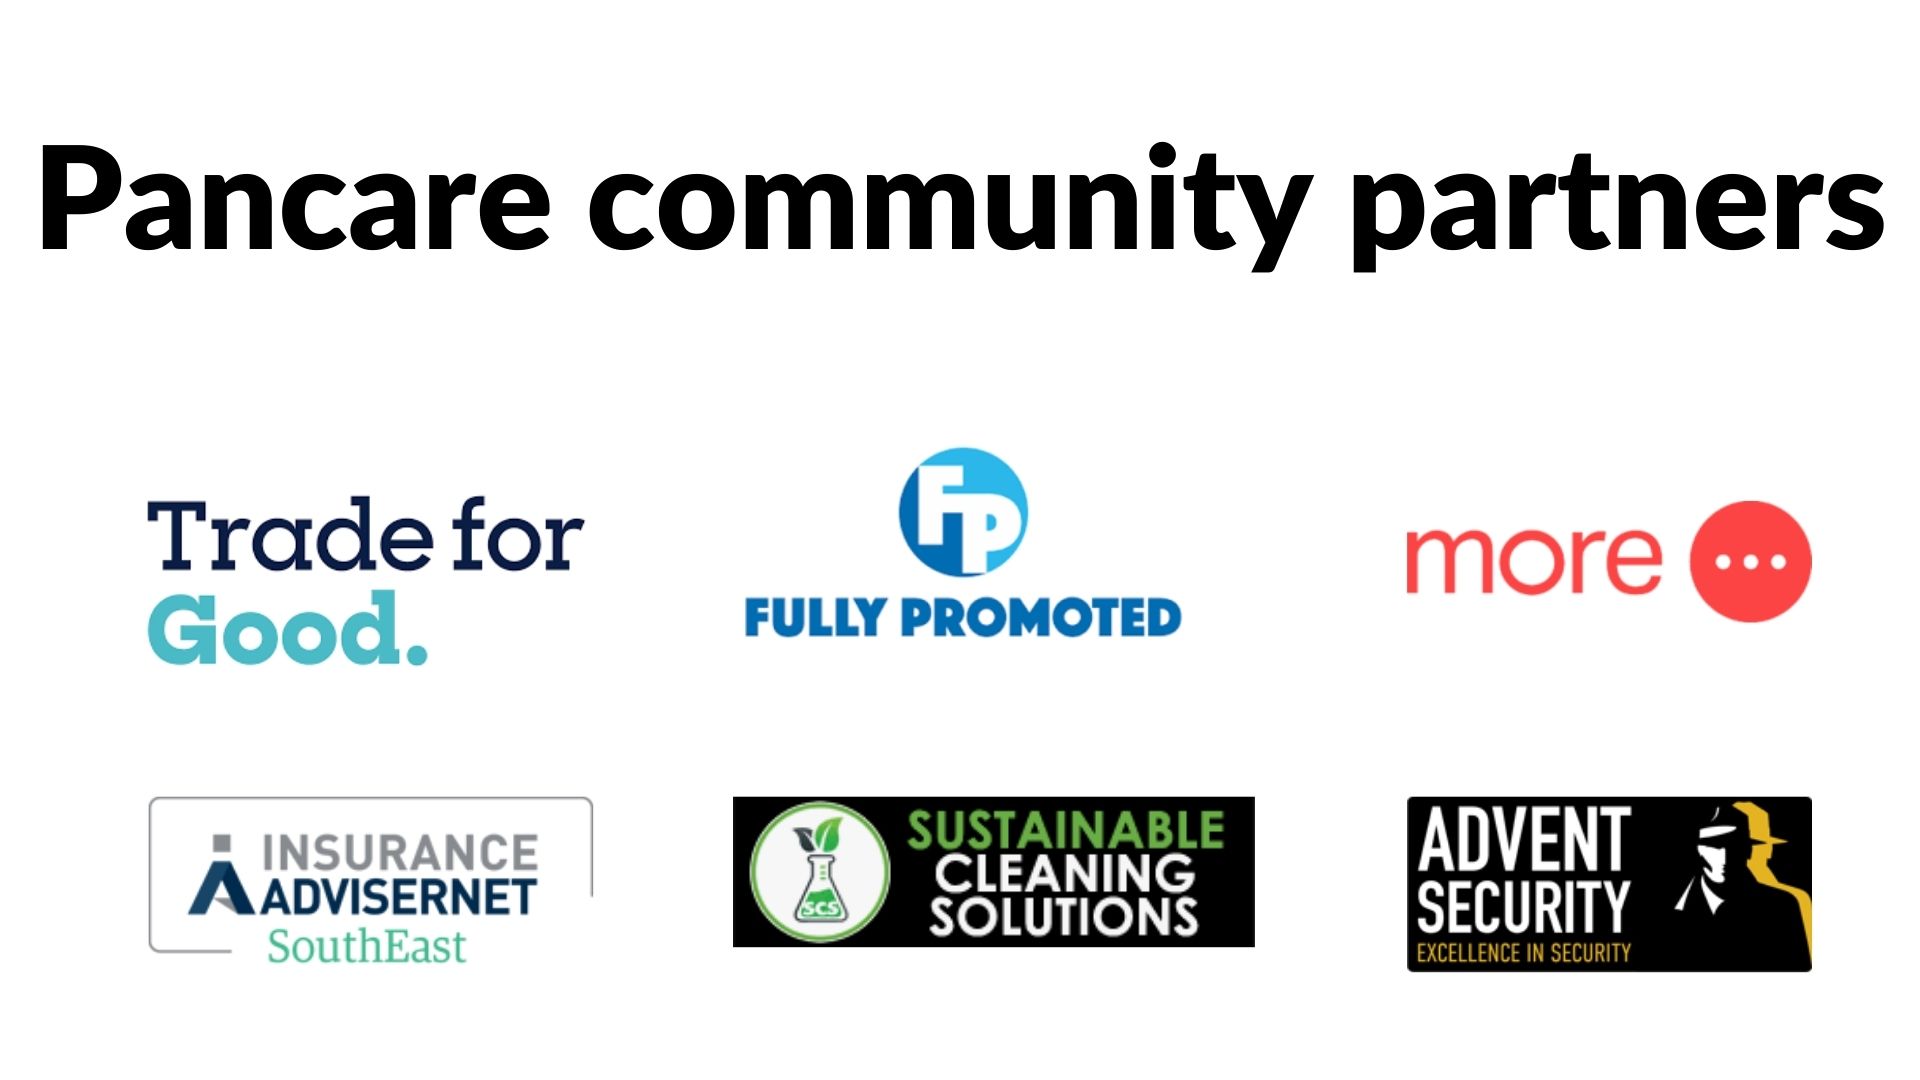 Pancare community partners (2)